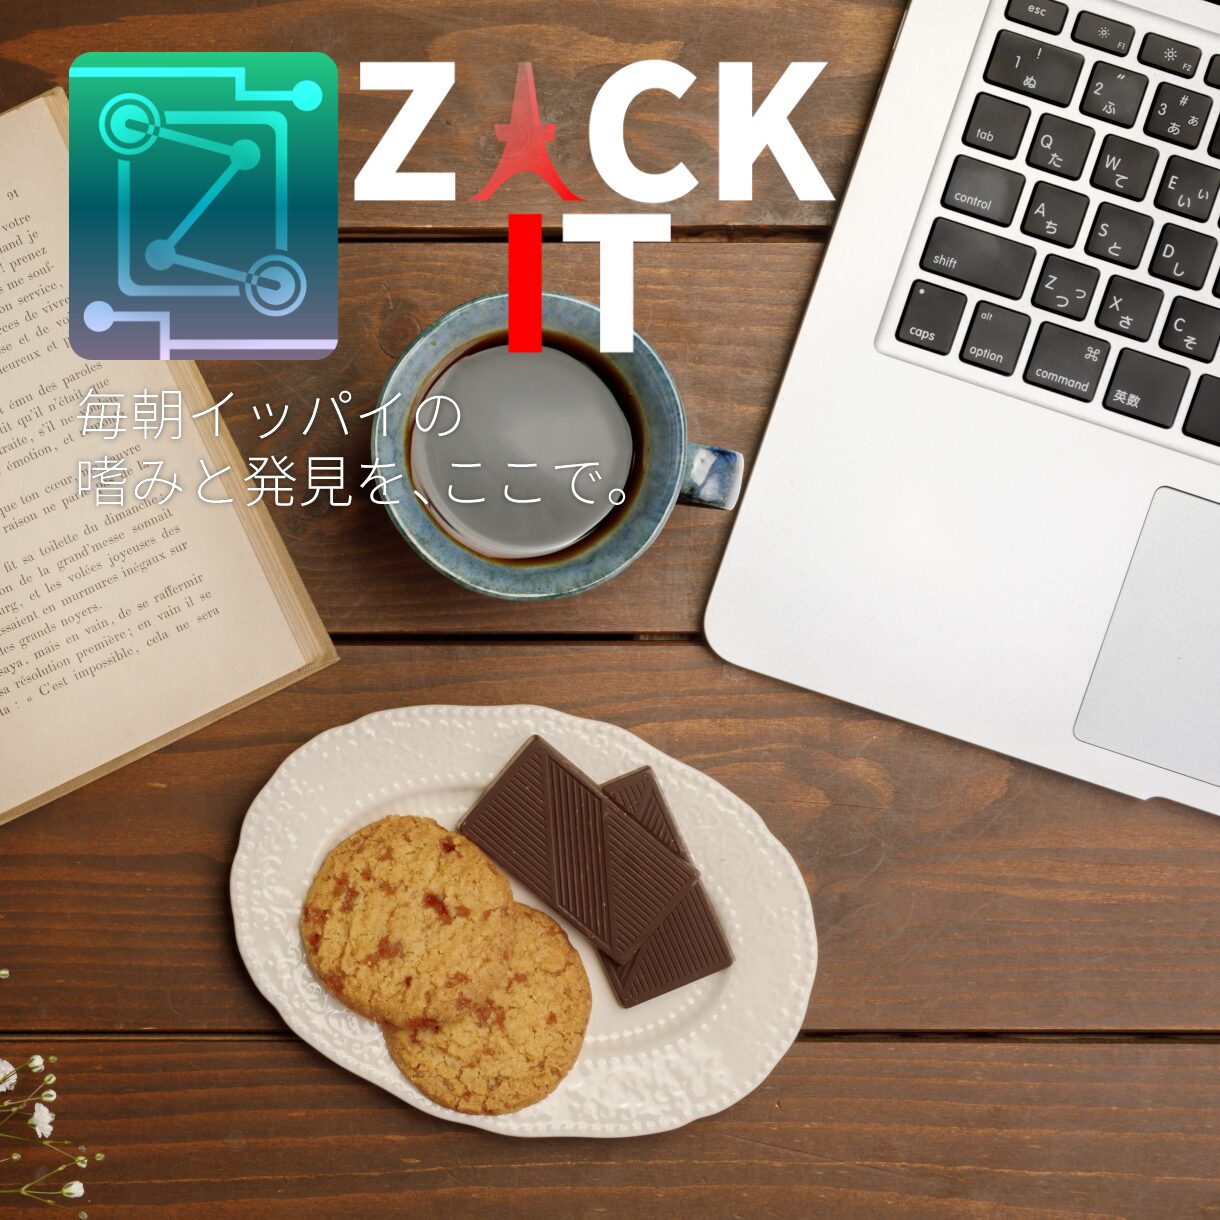 ZACK IT-トップページサムネイル画像